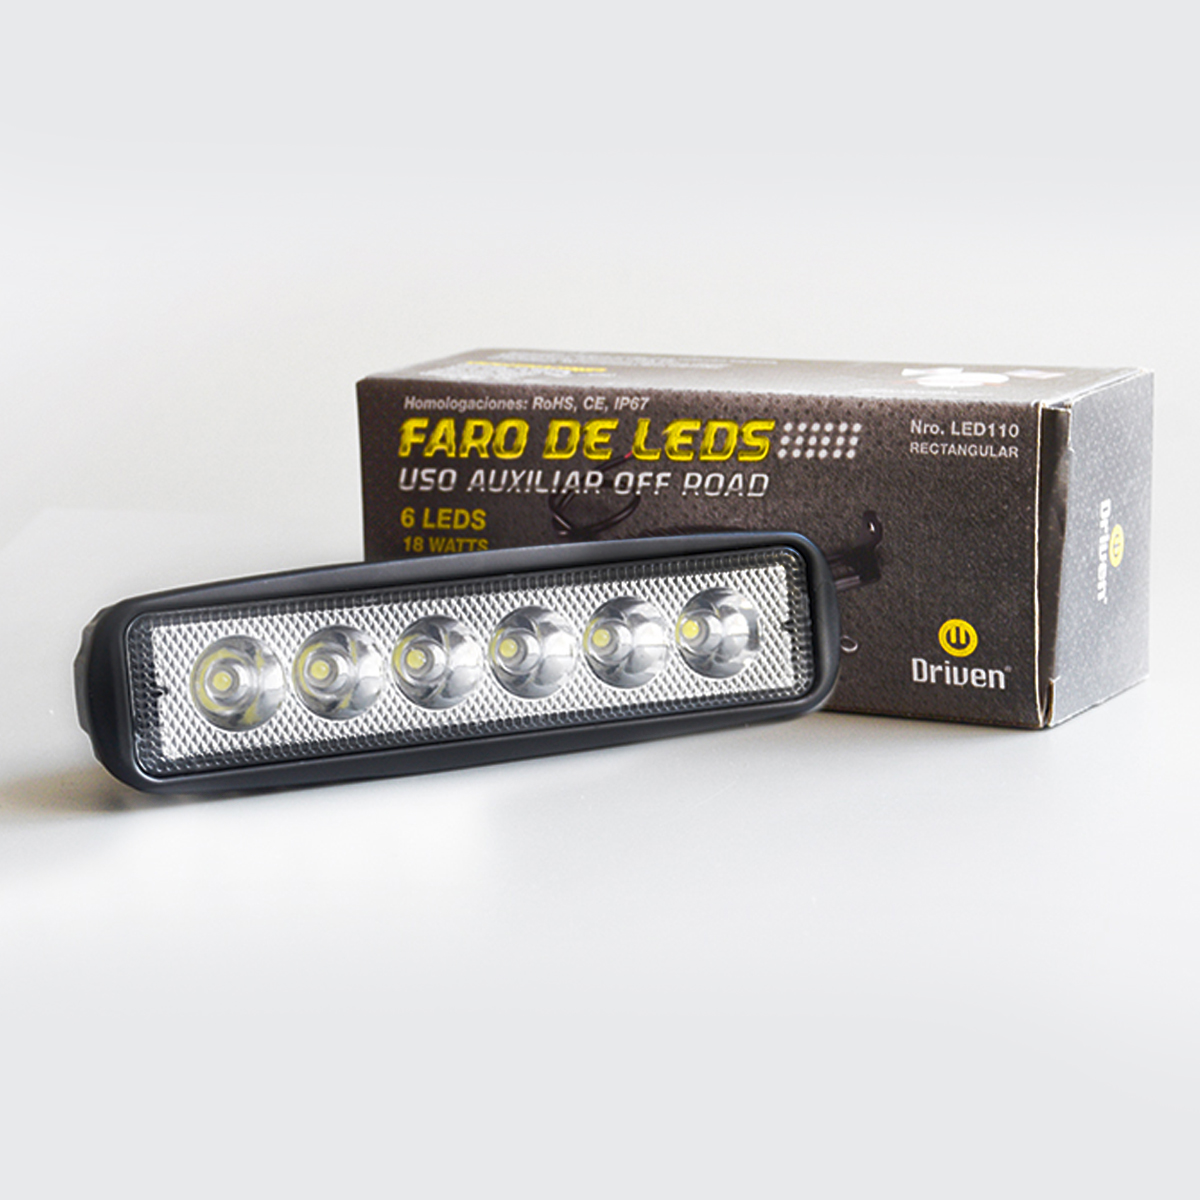 LED150C FARO DE LED OFF ROAD - 12 LEDS - 36 WATTS - LED CREE (DOBLE POTENCIA) -  DRIVEN